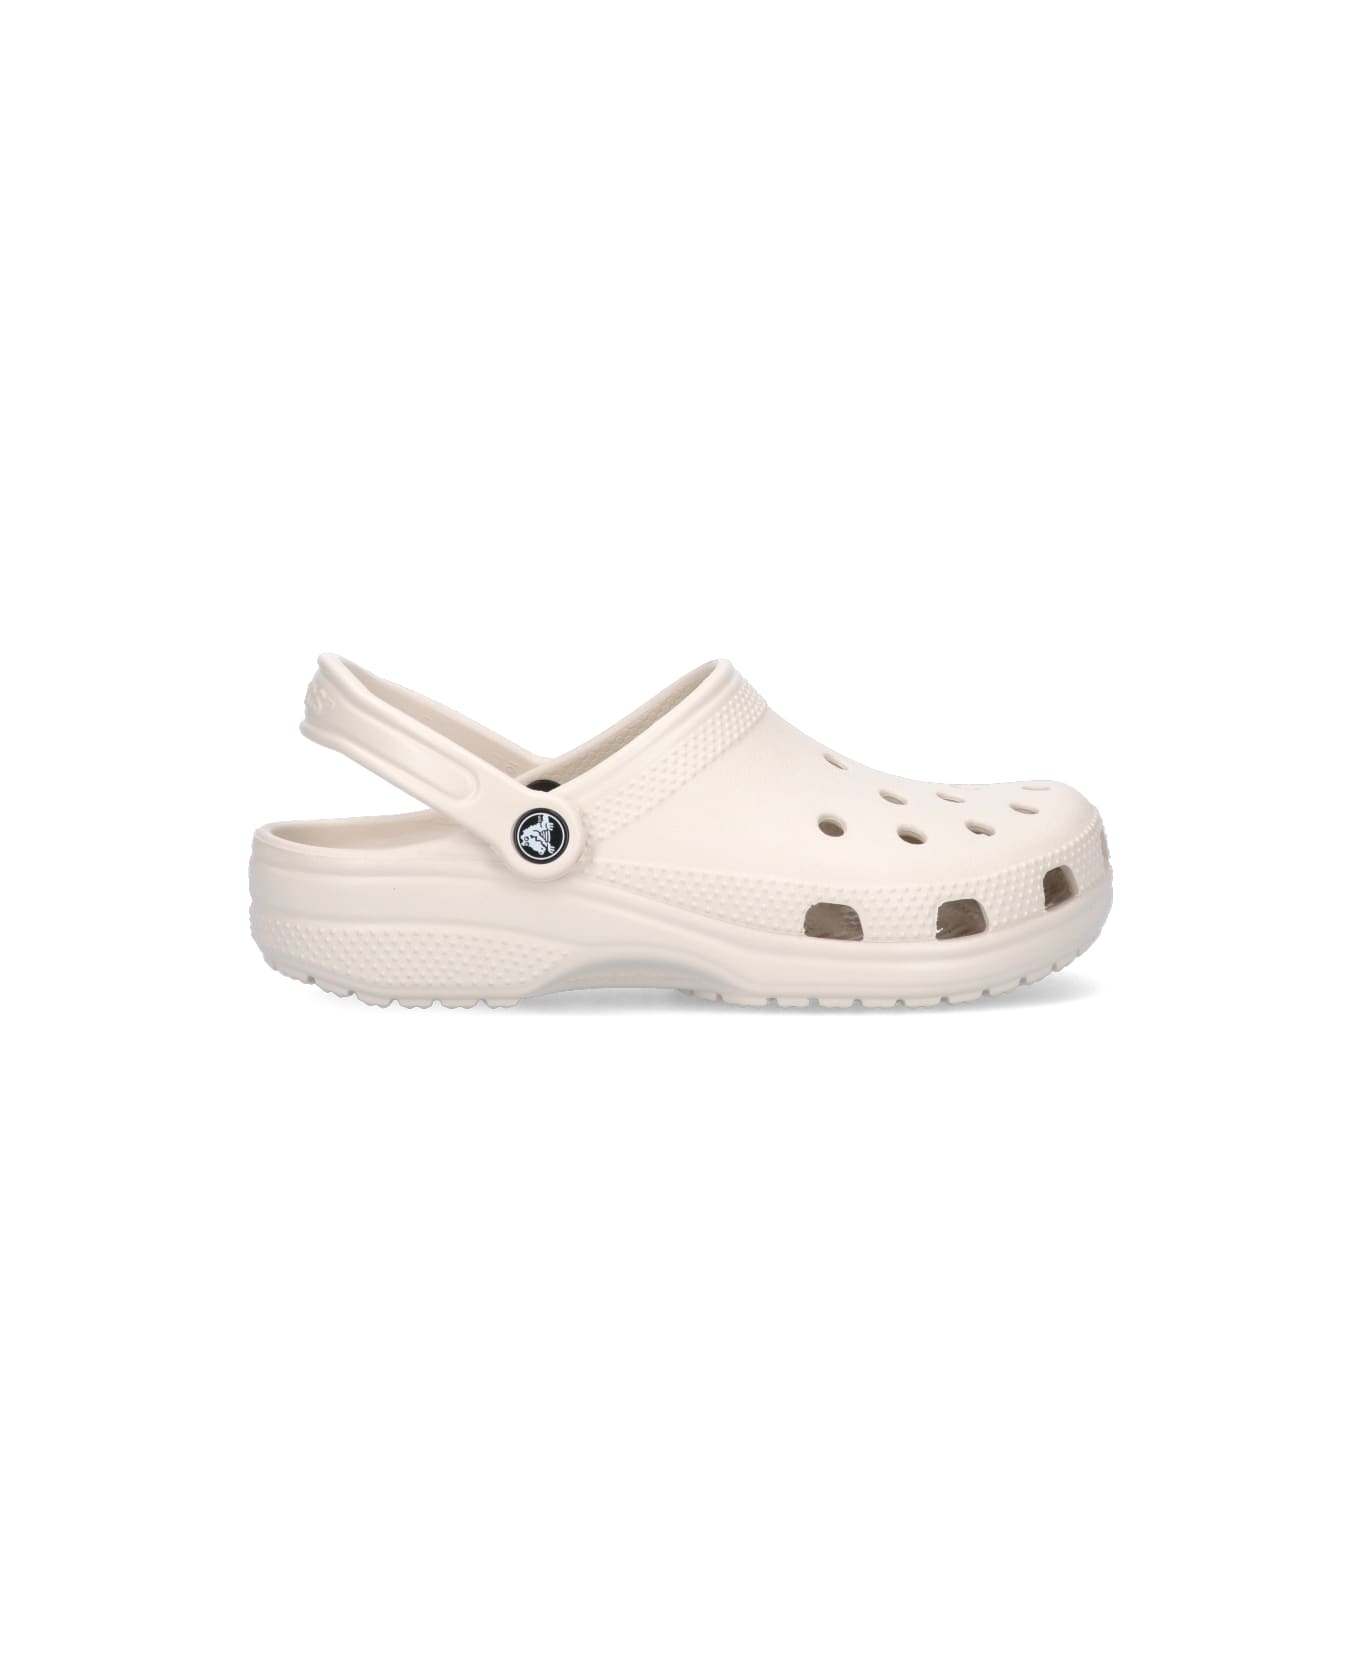 Crocs Flat Shoes - White